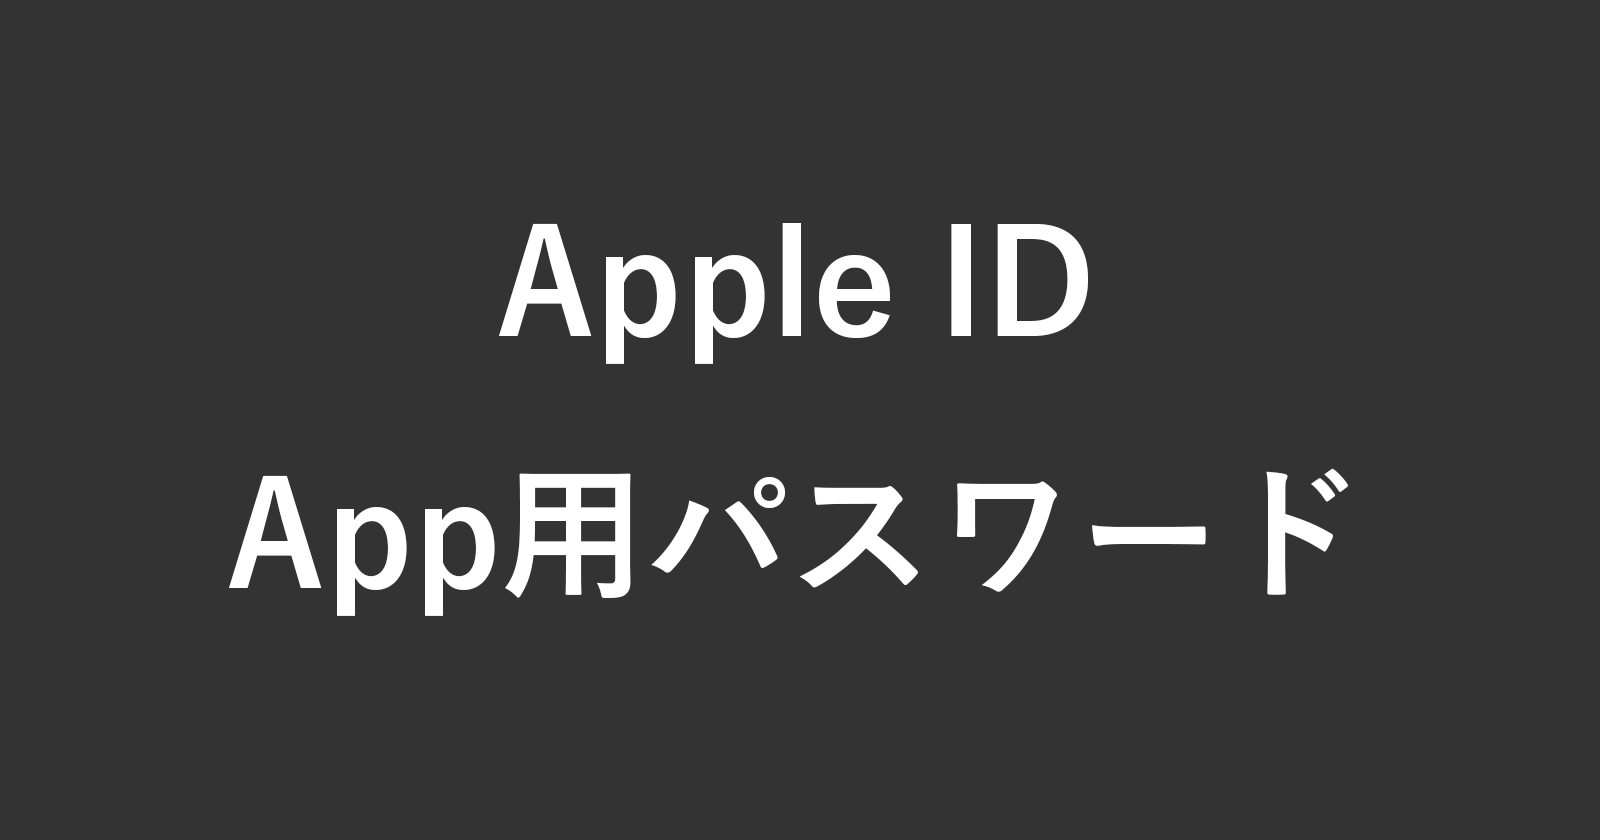 apple id app password